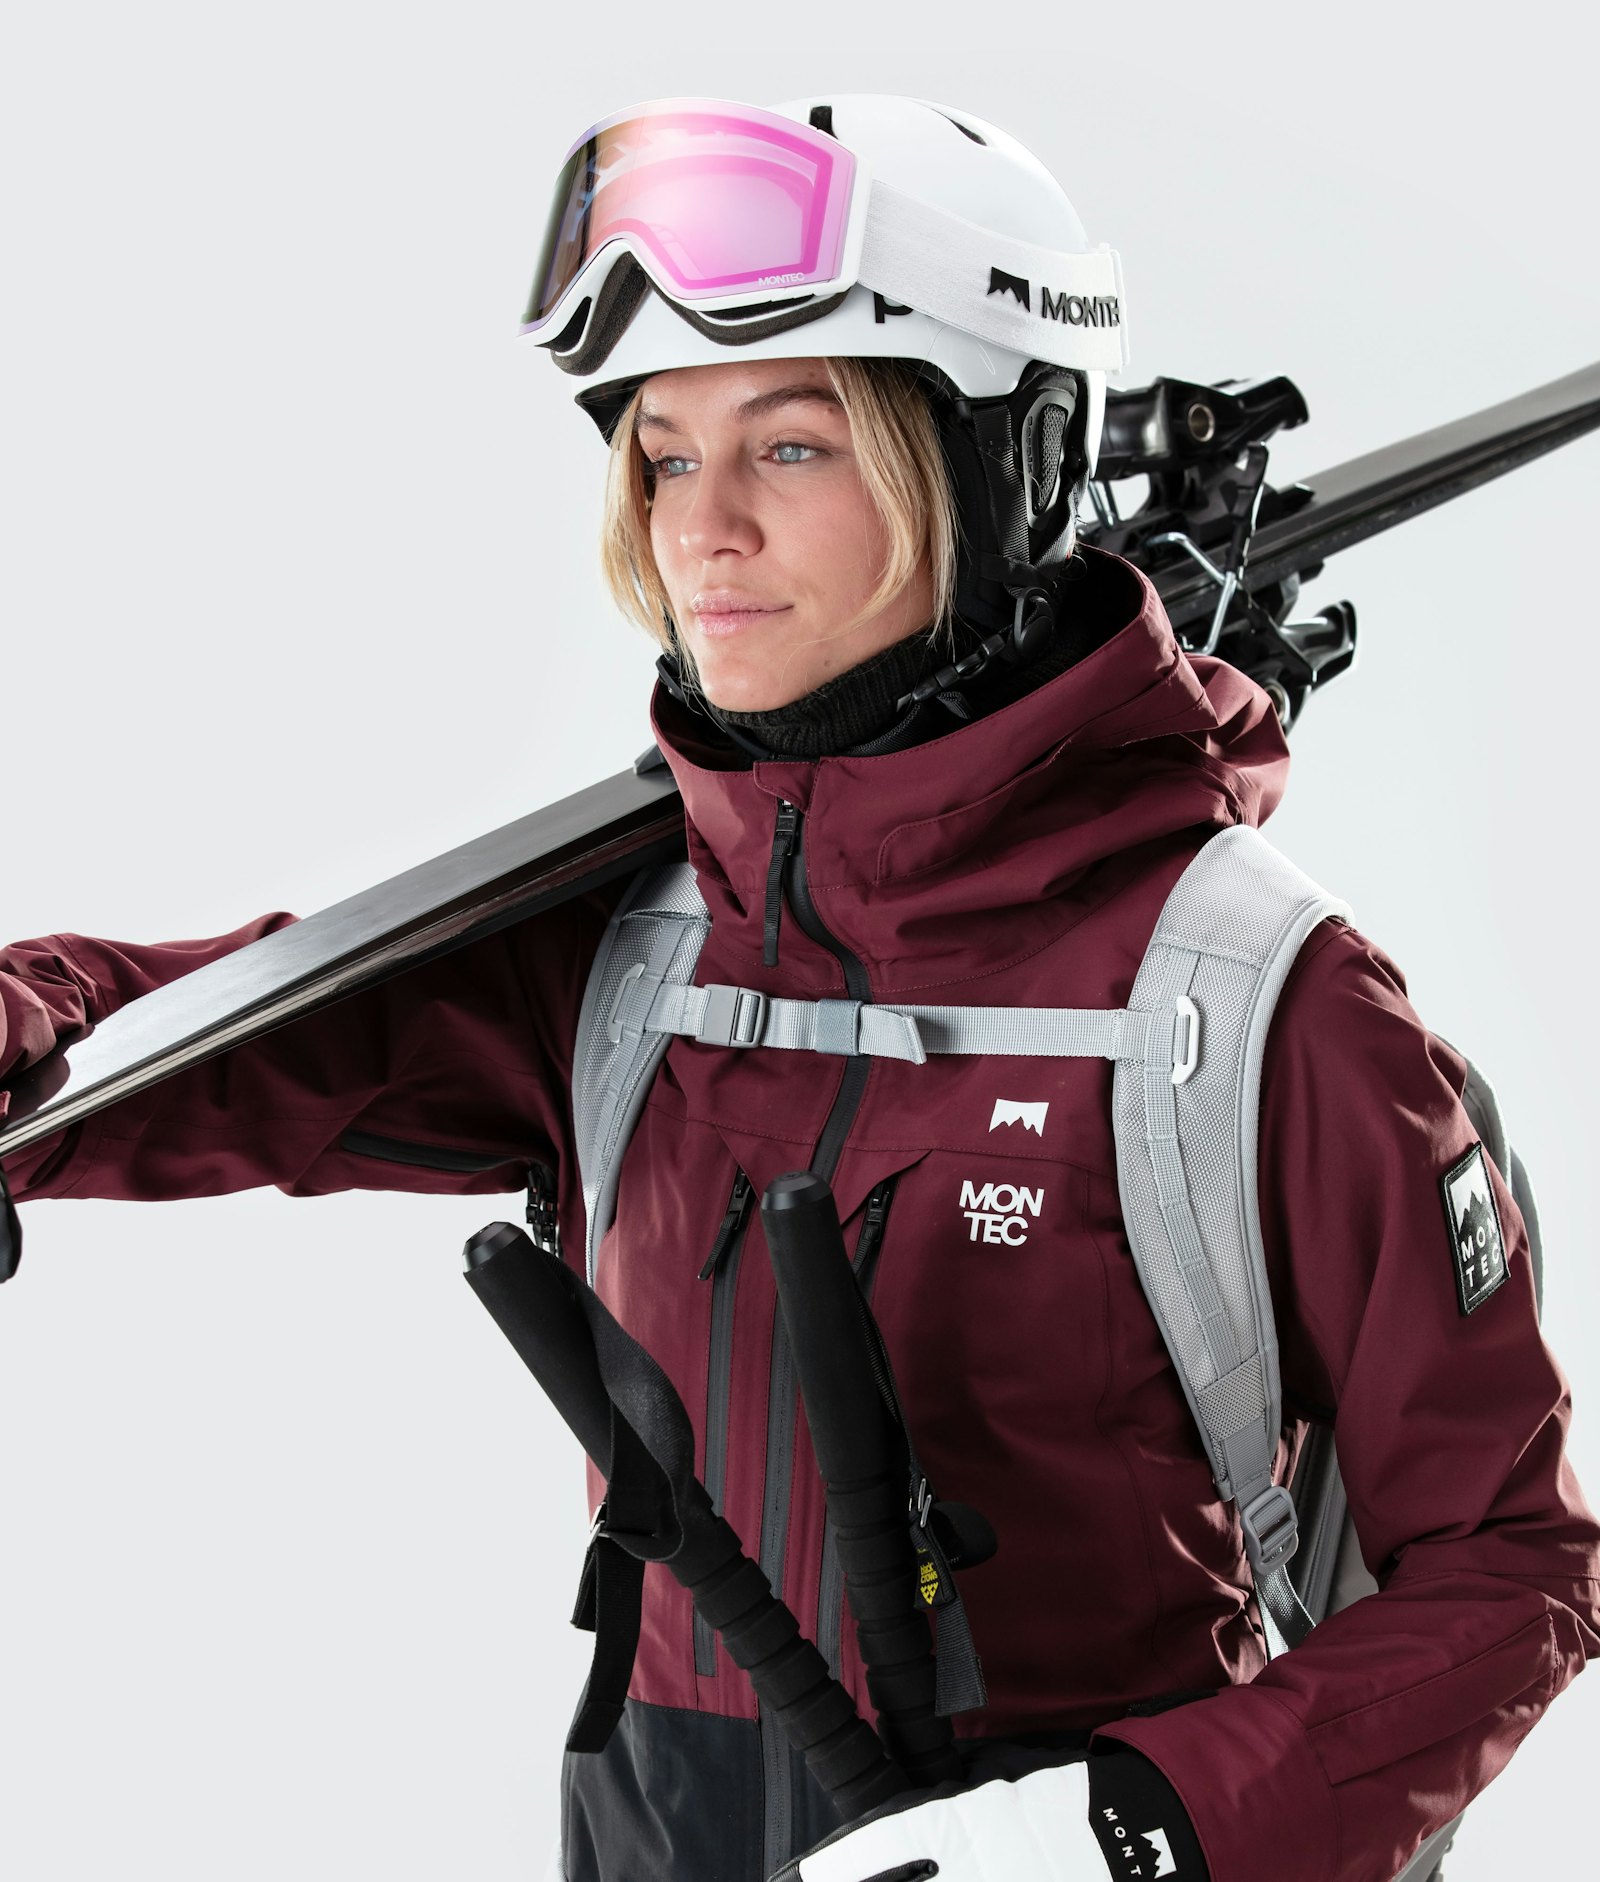 Moss W 2020 Skijakke Dame Burgundy/Black